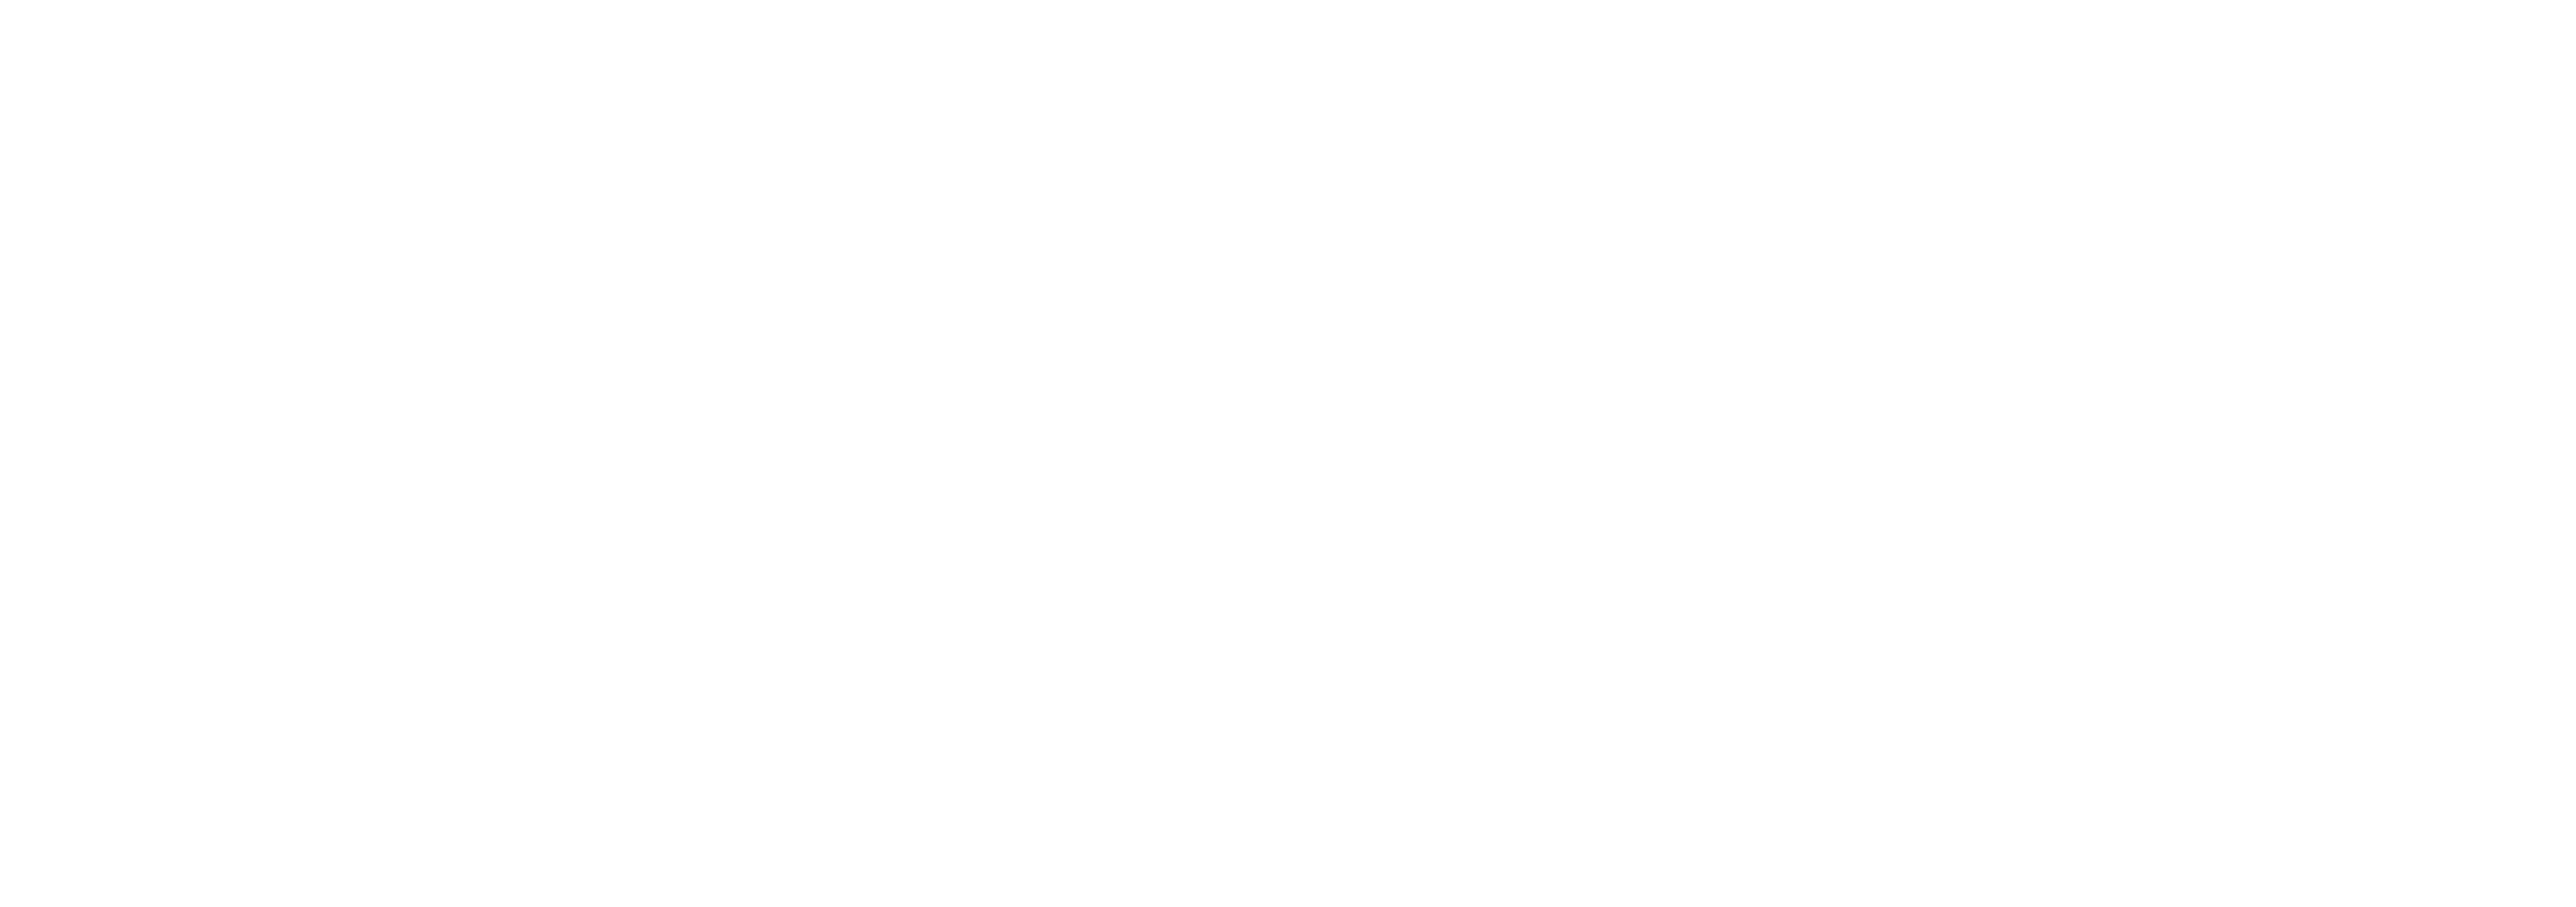 UniPath